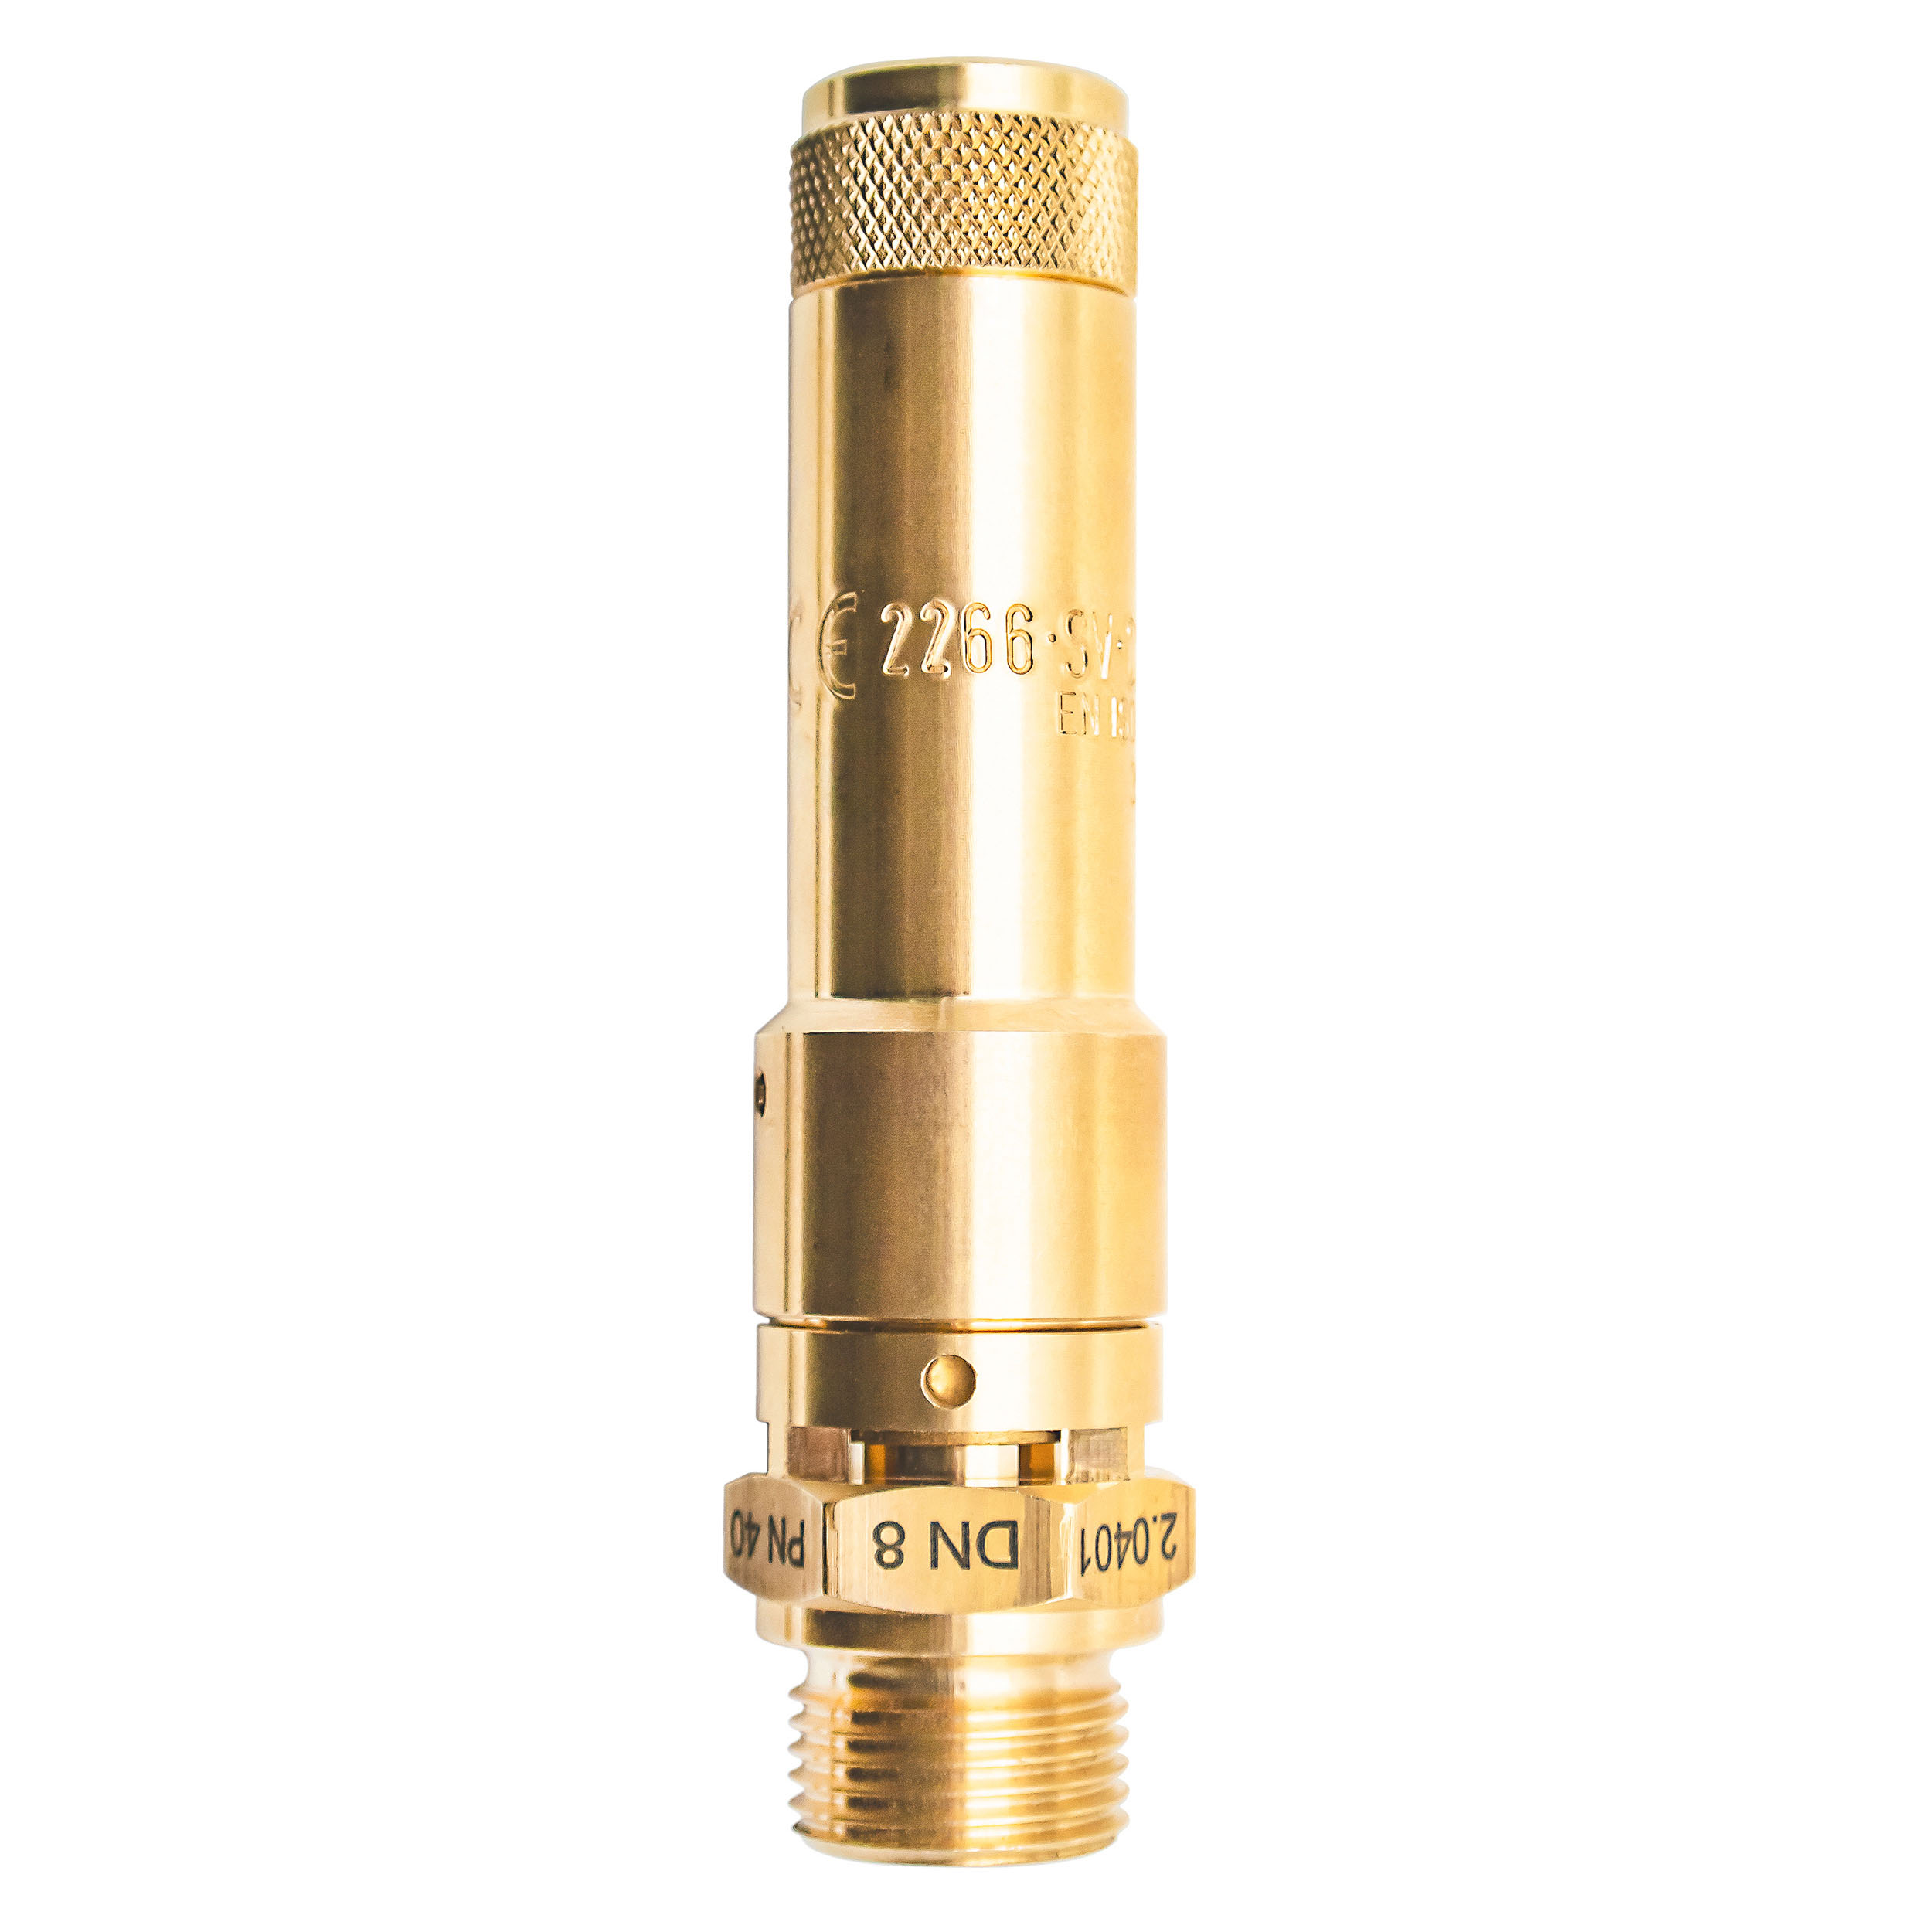 Savety valve component tested DN 8, G¼, set pressure: 4.6 bar (66,7 psi)